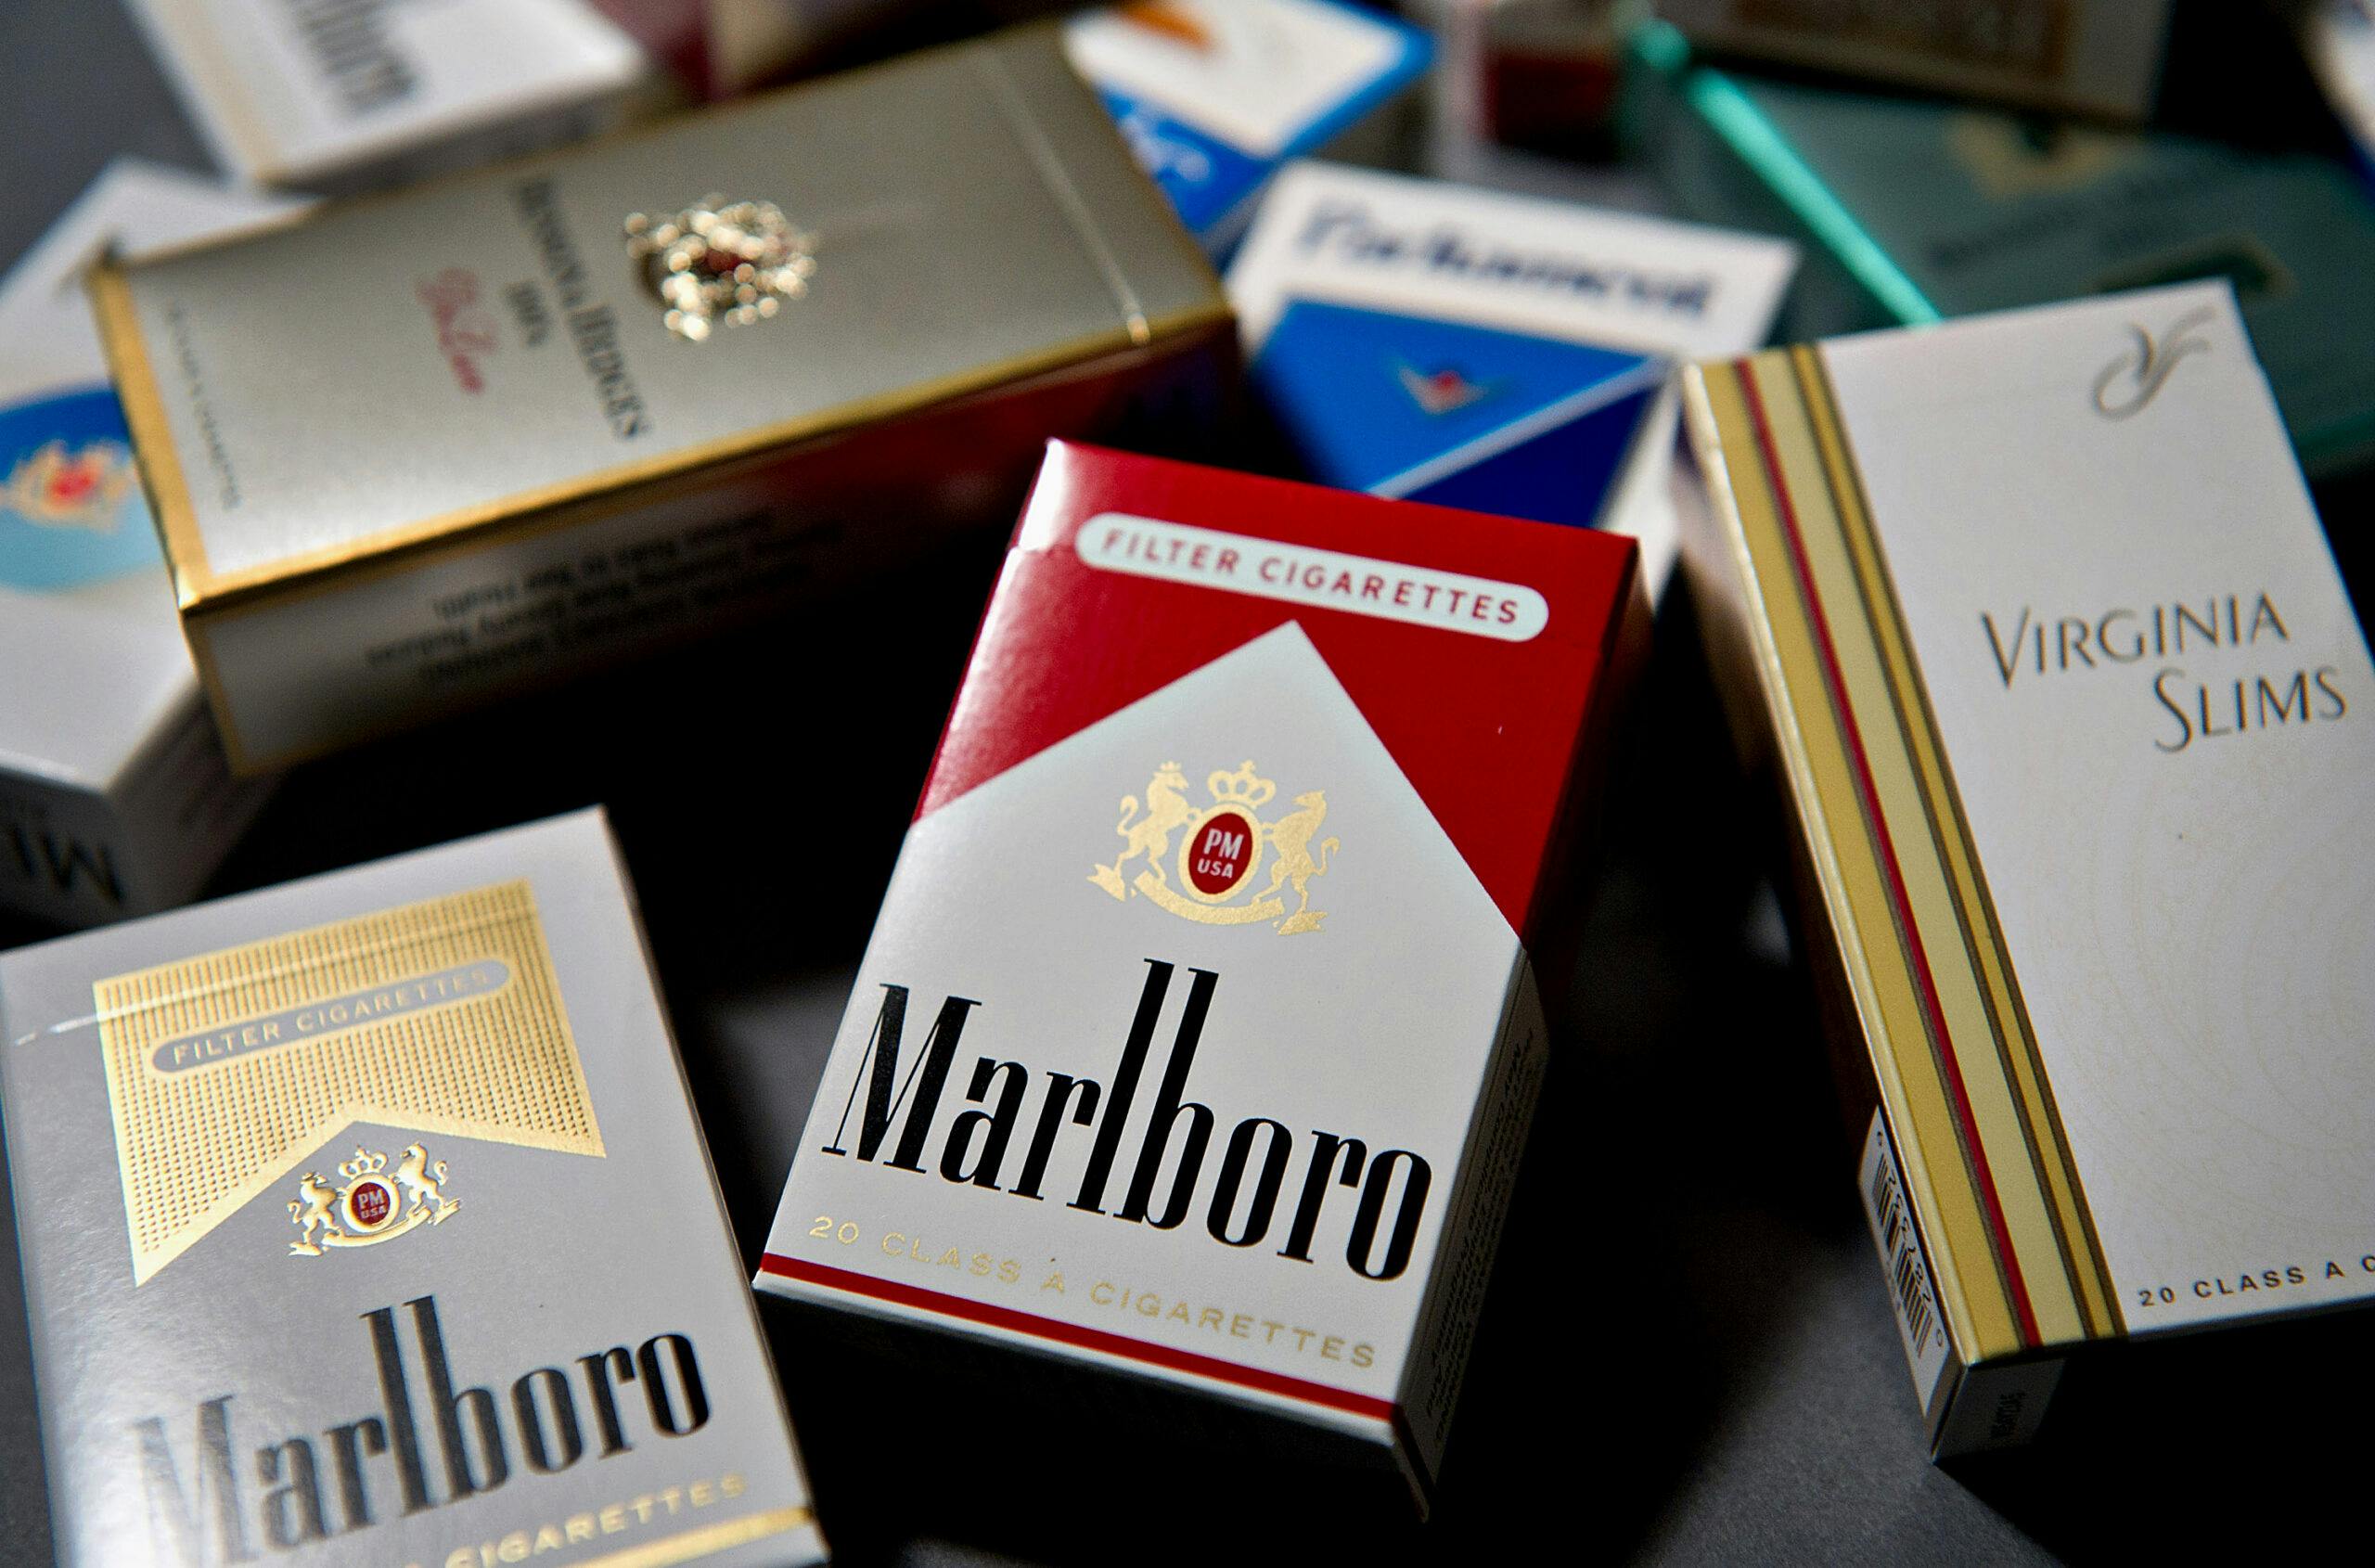 Cigarette company Philip Morris to pay millions